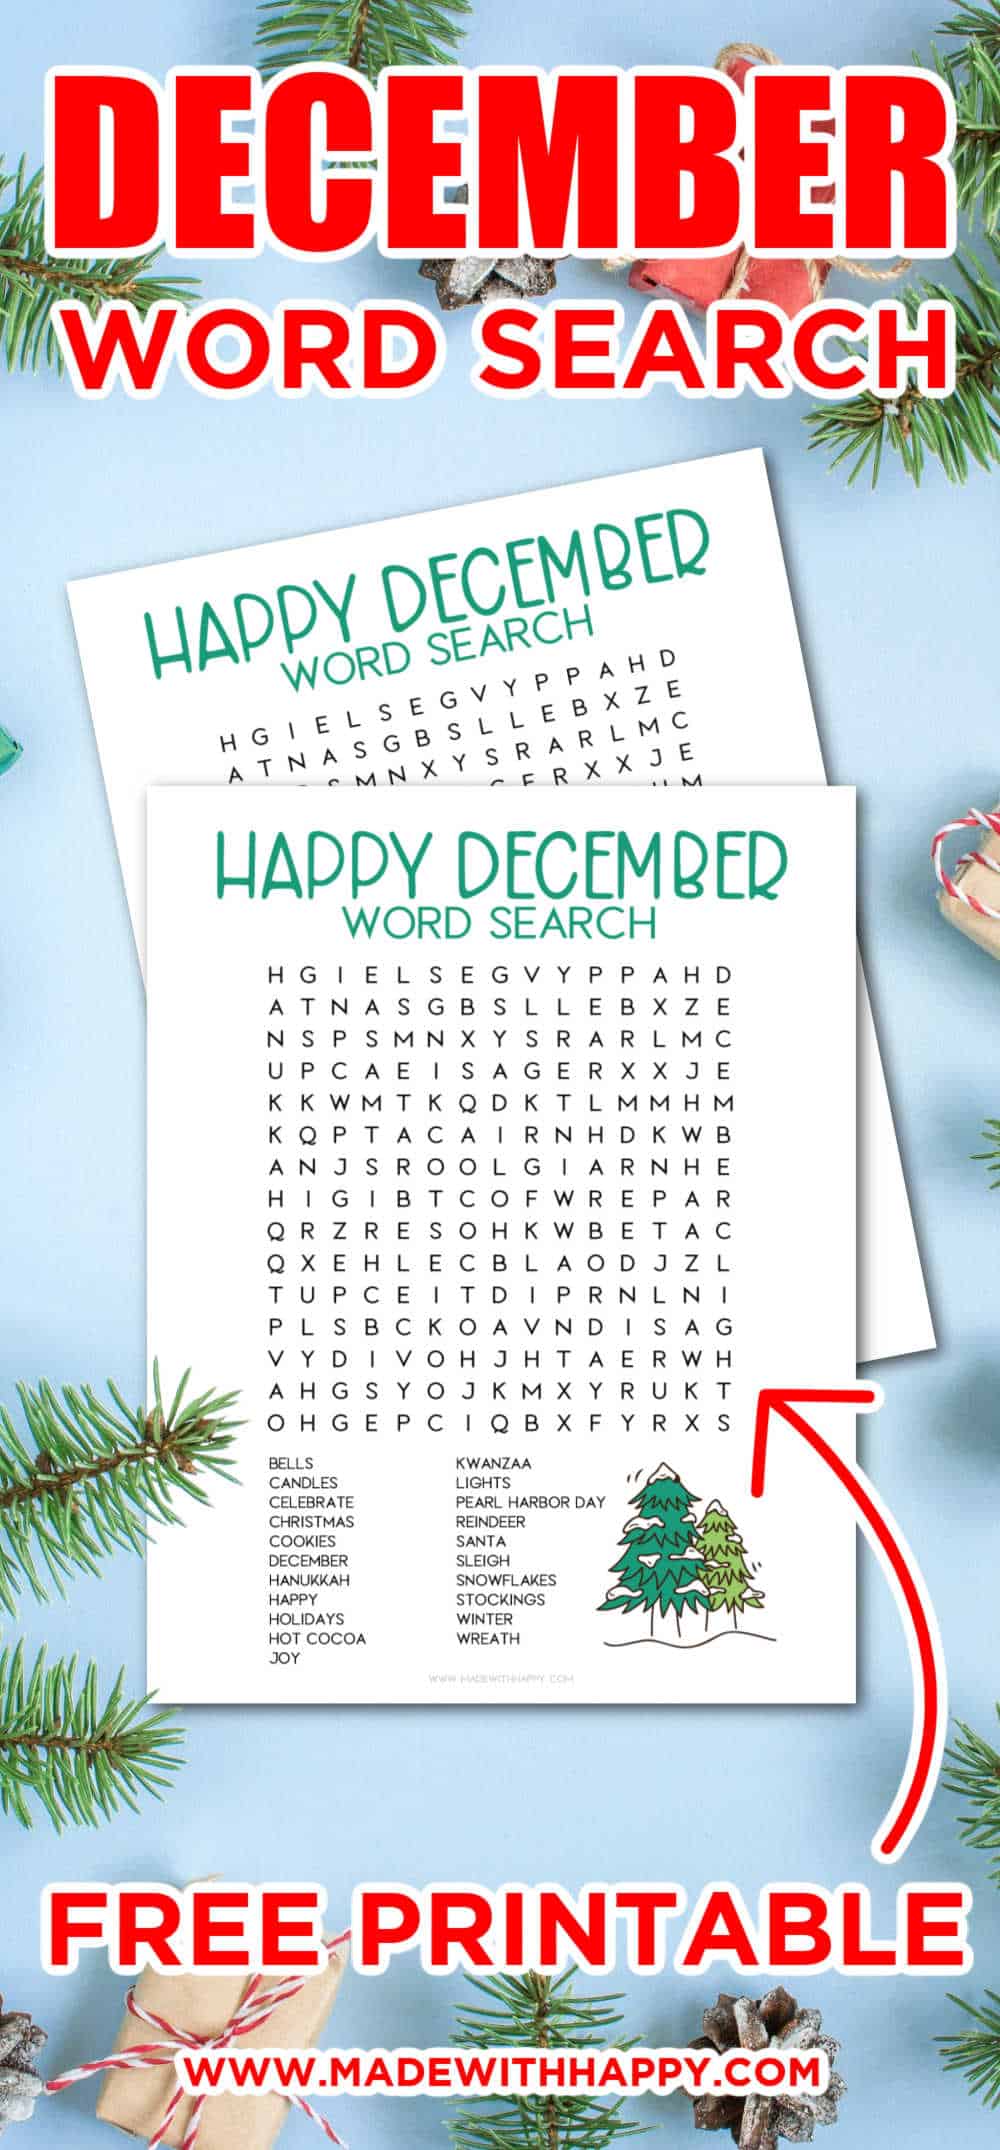 December Holiday word serch